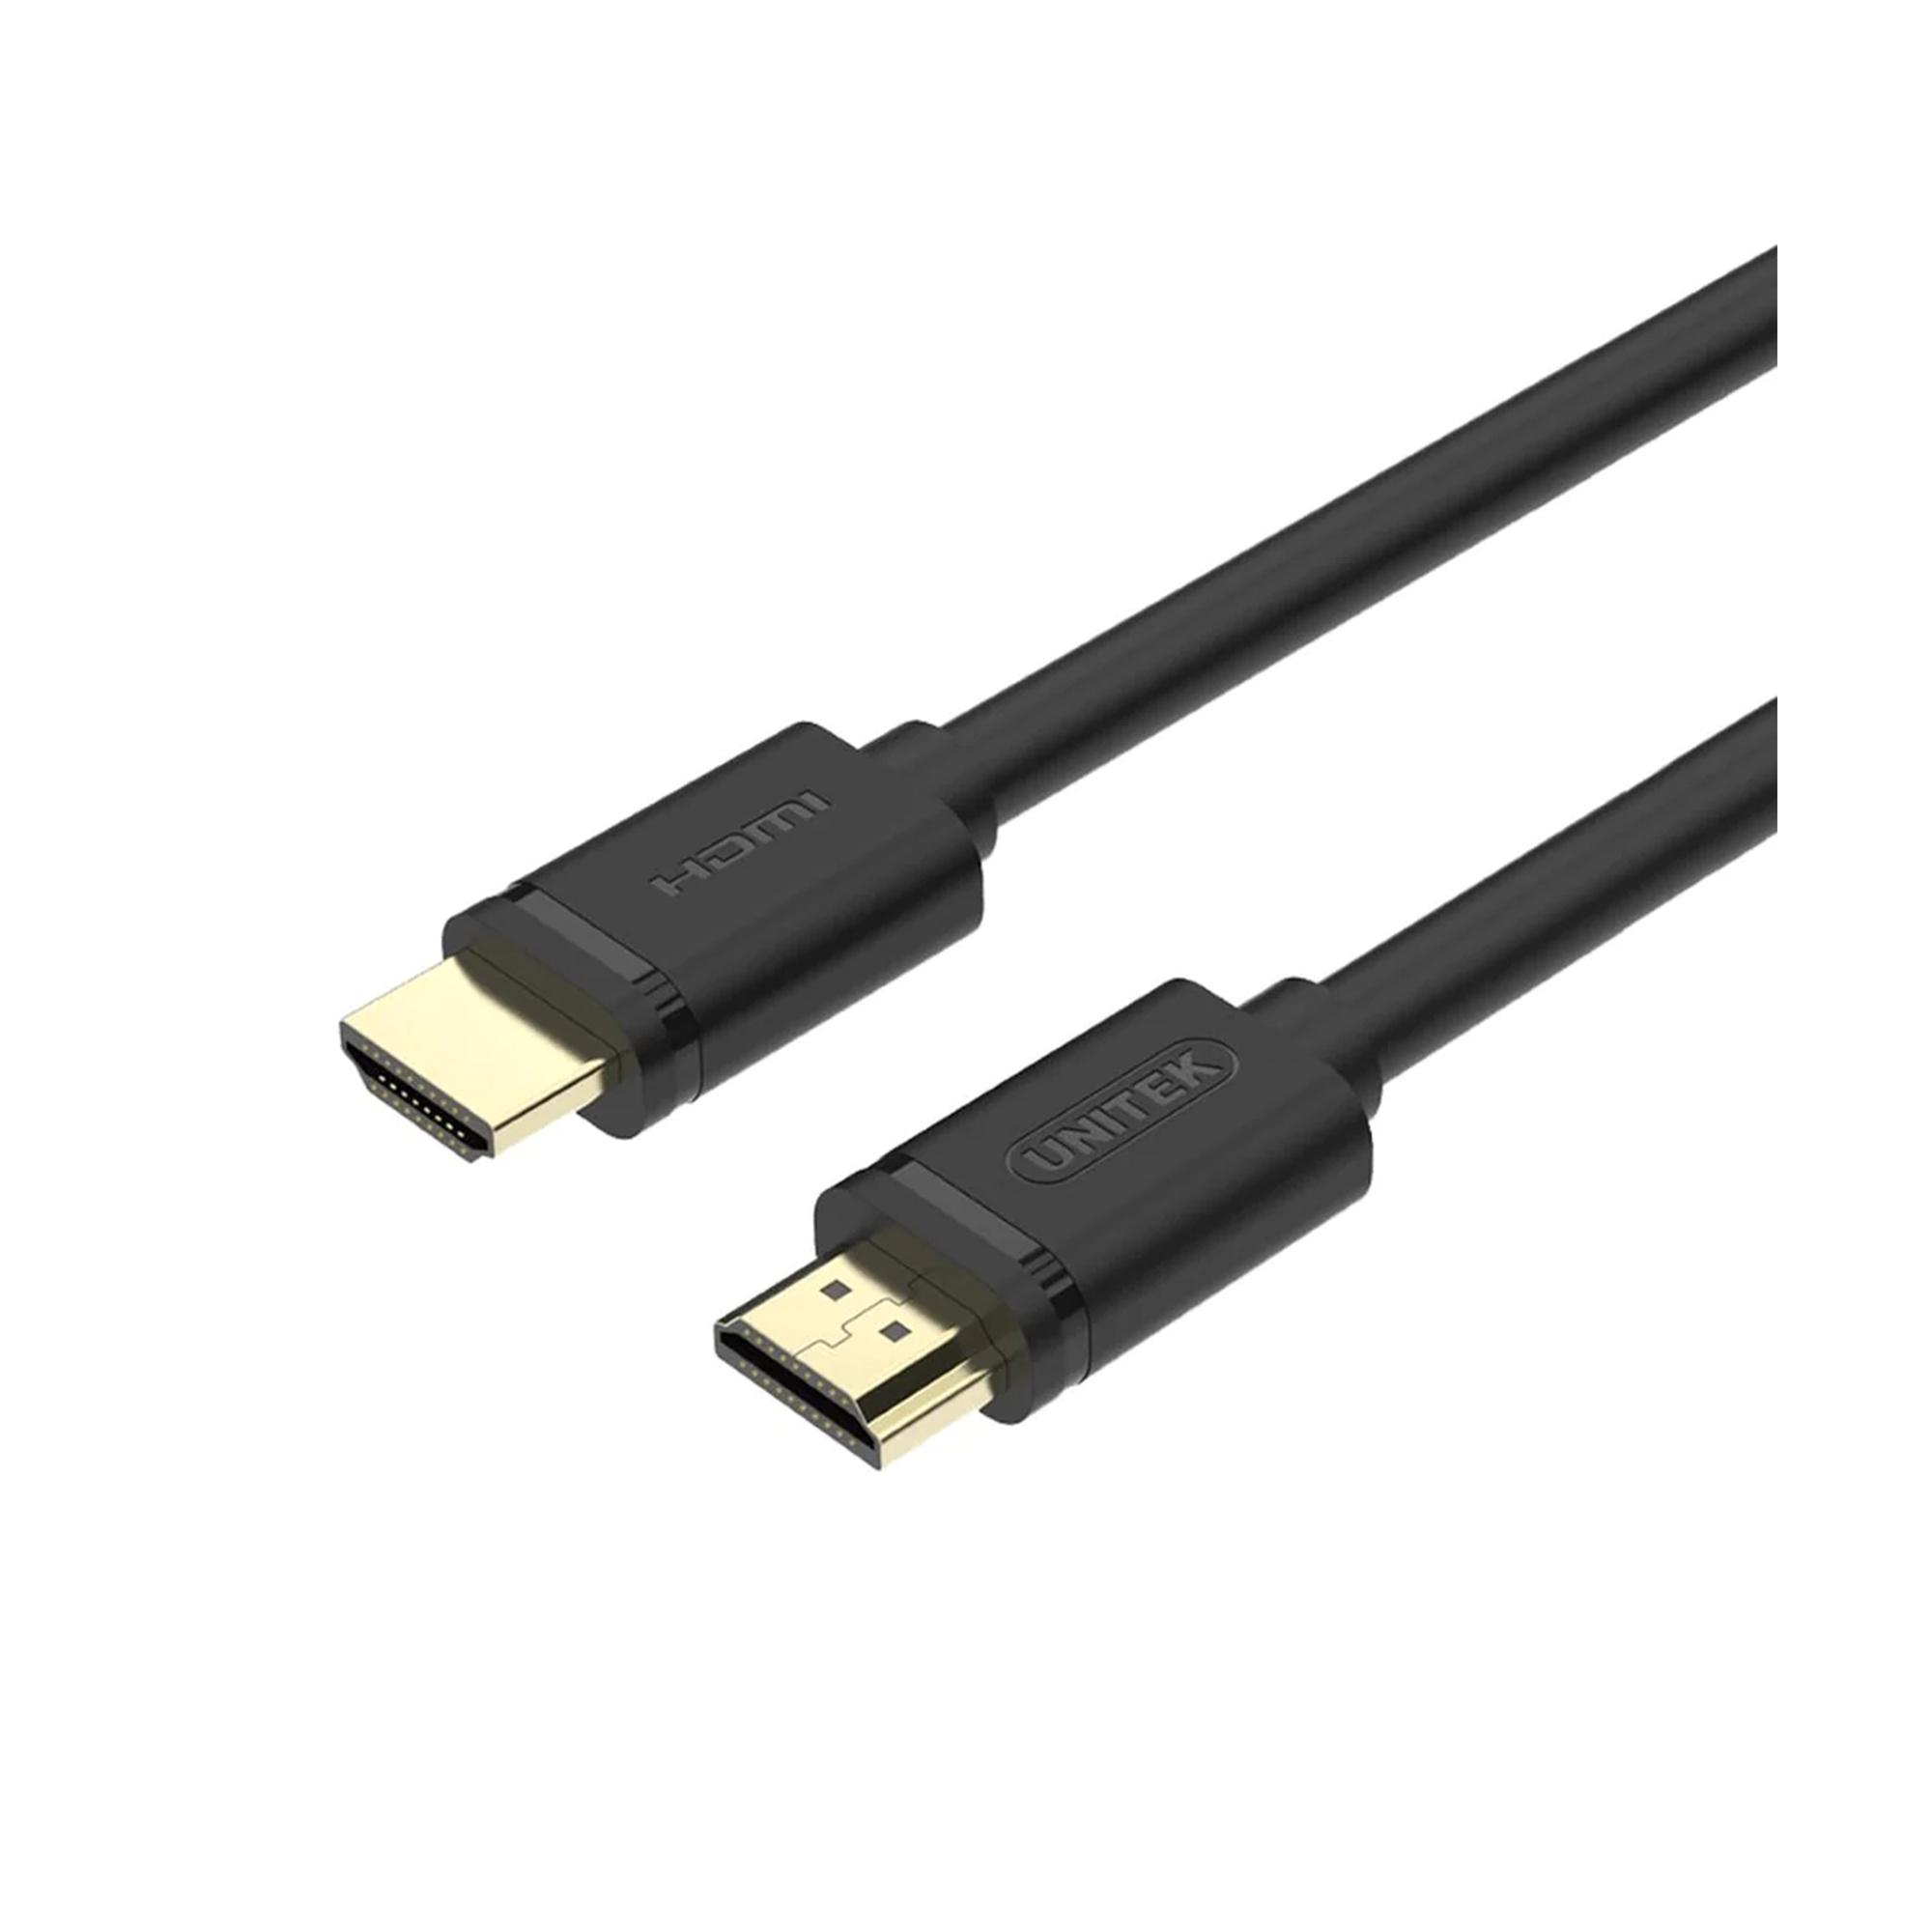 Unitek 5M HDMI Male to Male Cable (Y-C140M)